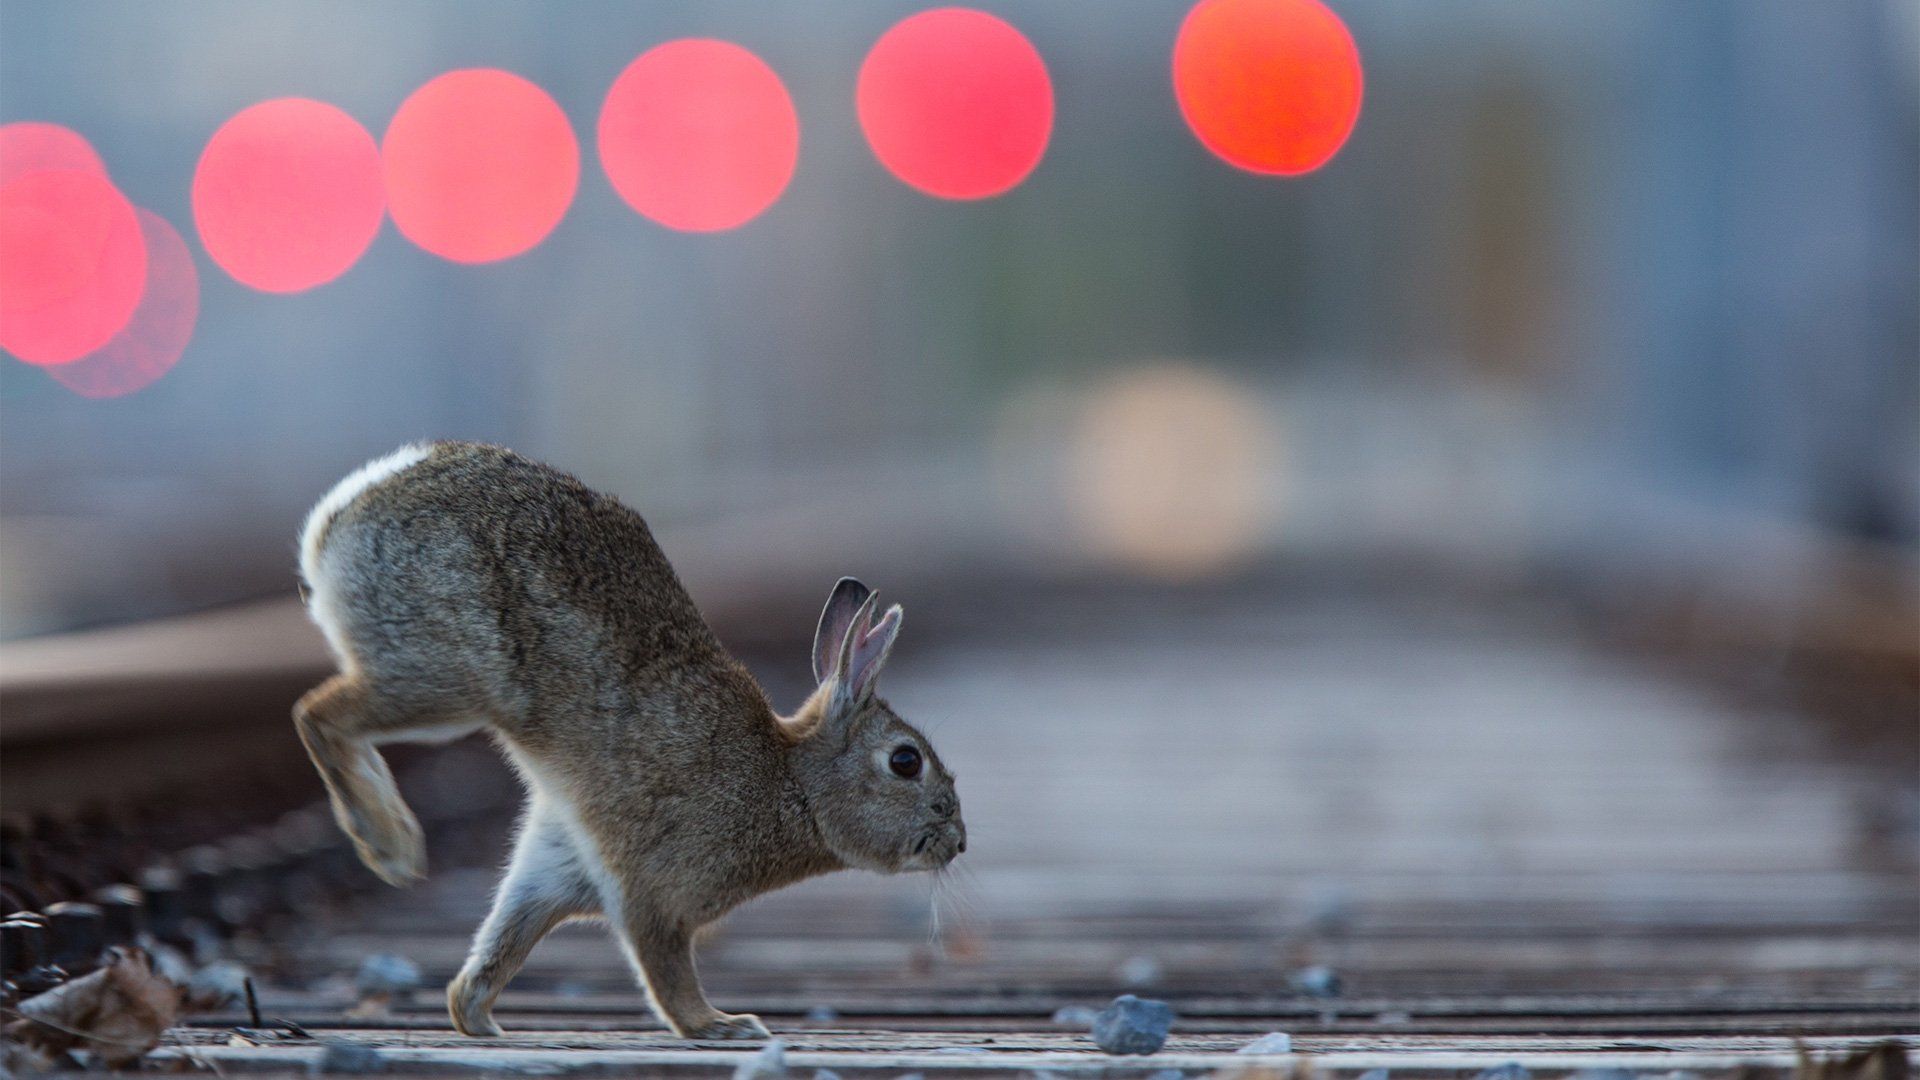 A rabbit runs across a train track in Vienna. 